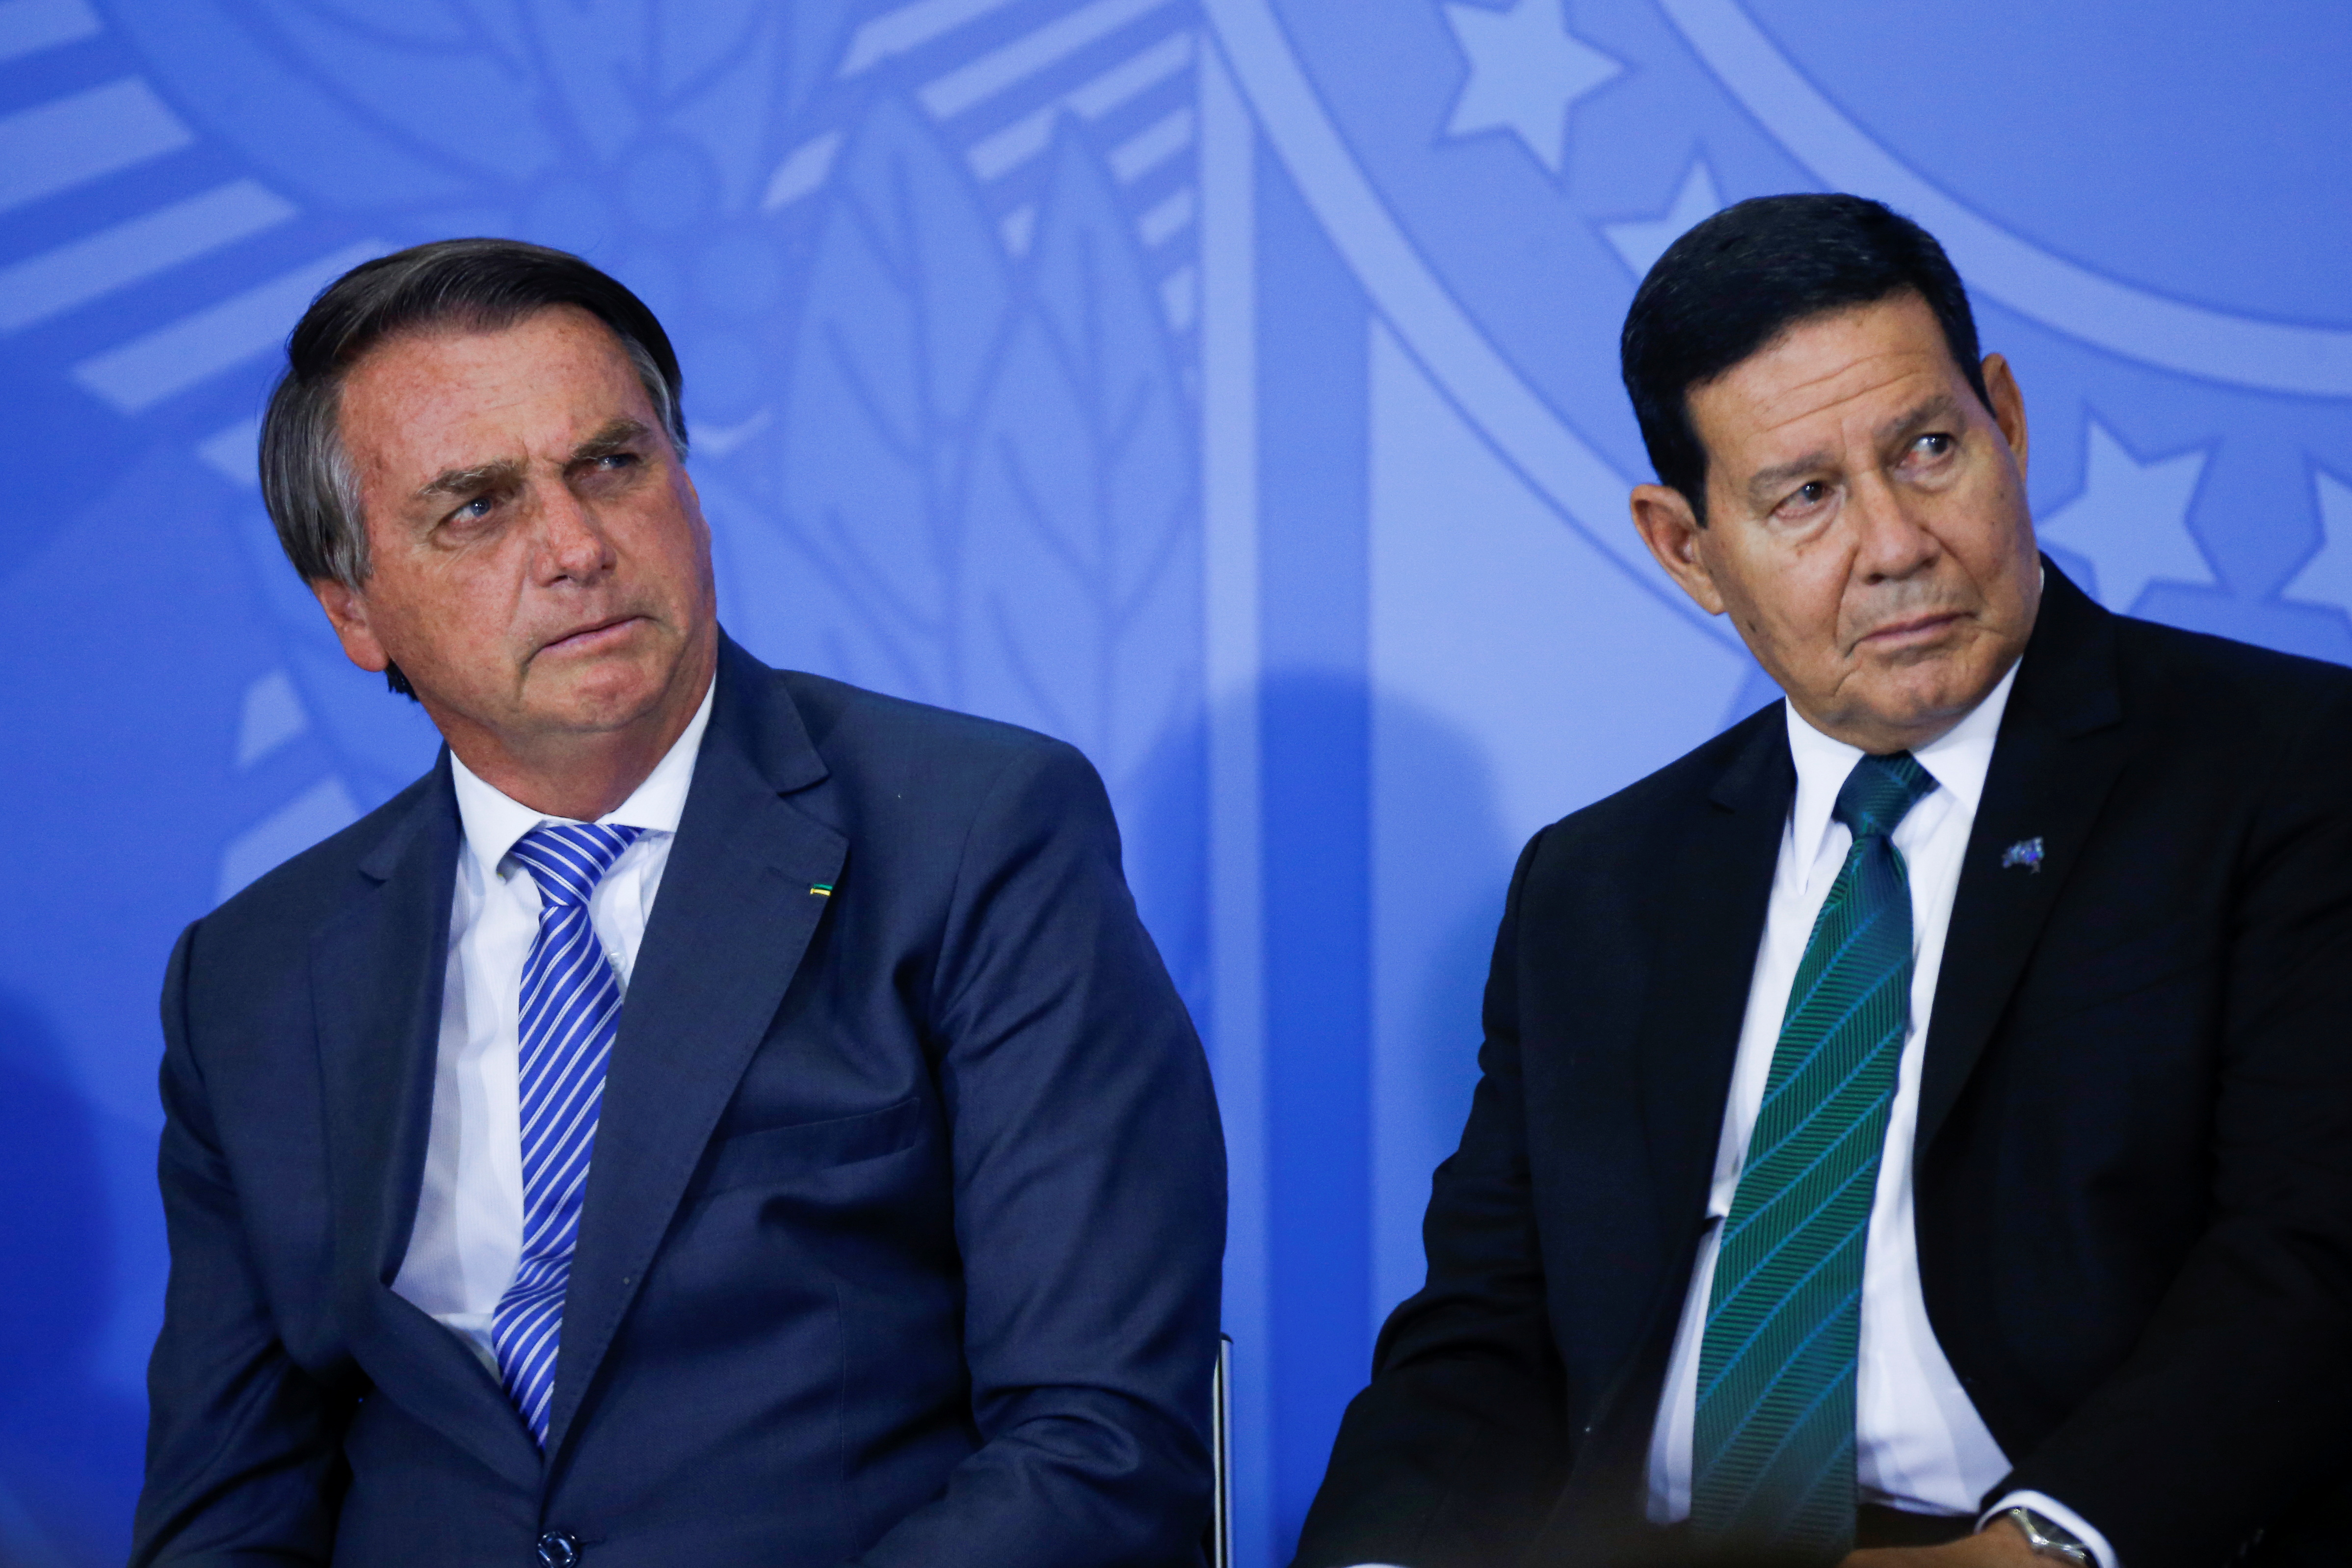 Brazil's President Jair Bolsonaro and Brazil's Vice President Hamilton Mourao attend a ceremony at the Planalto Palace